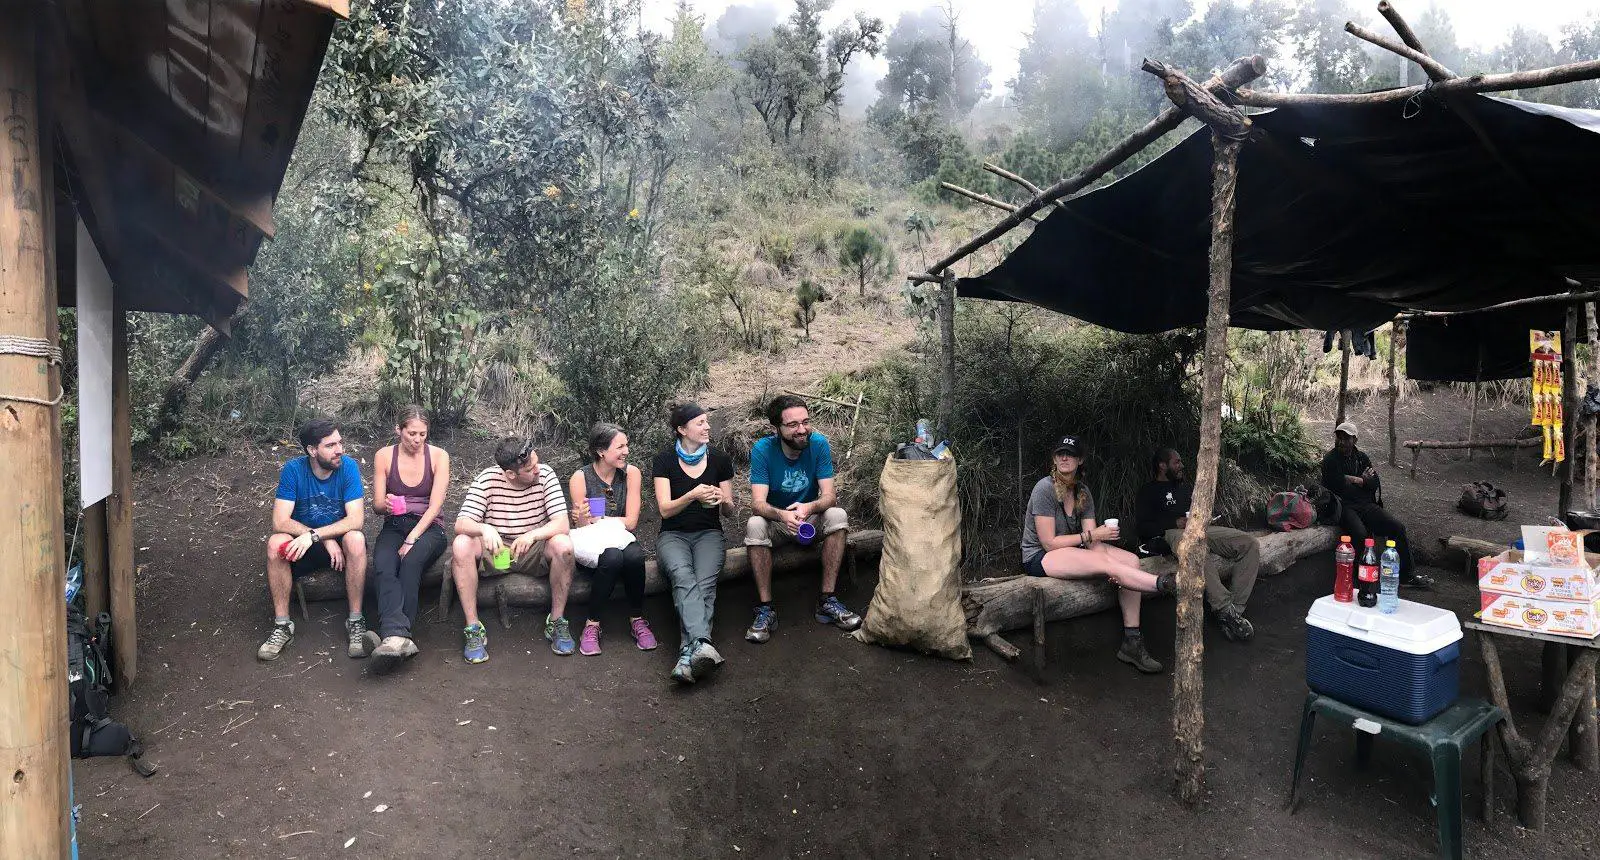 Hike Acatenango Guatemala | The Complete Guide to the Acatenango Volcano Hike